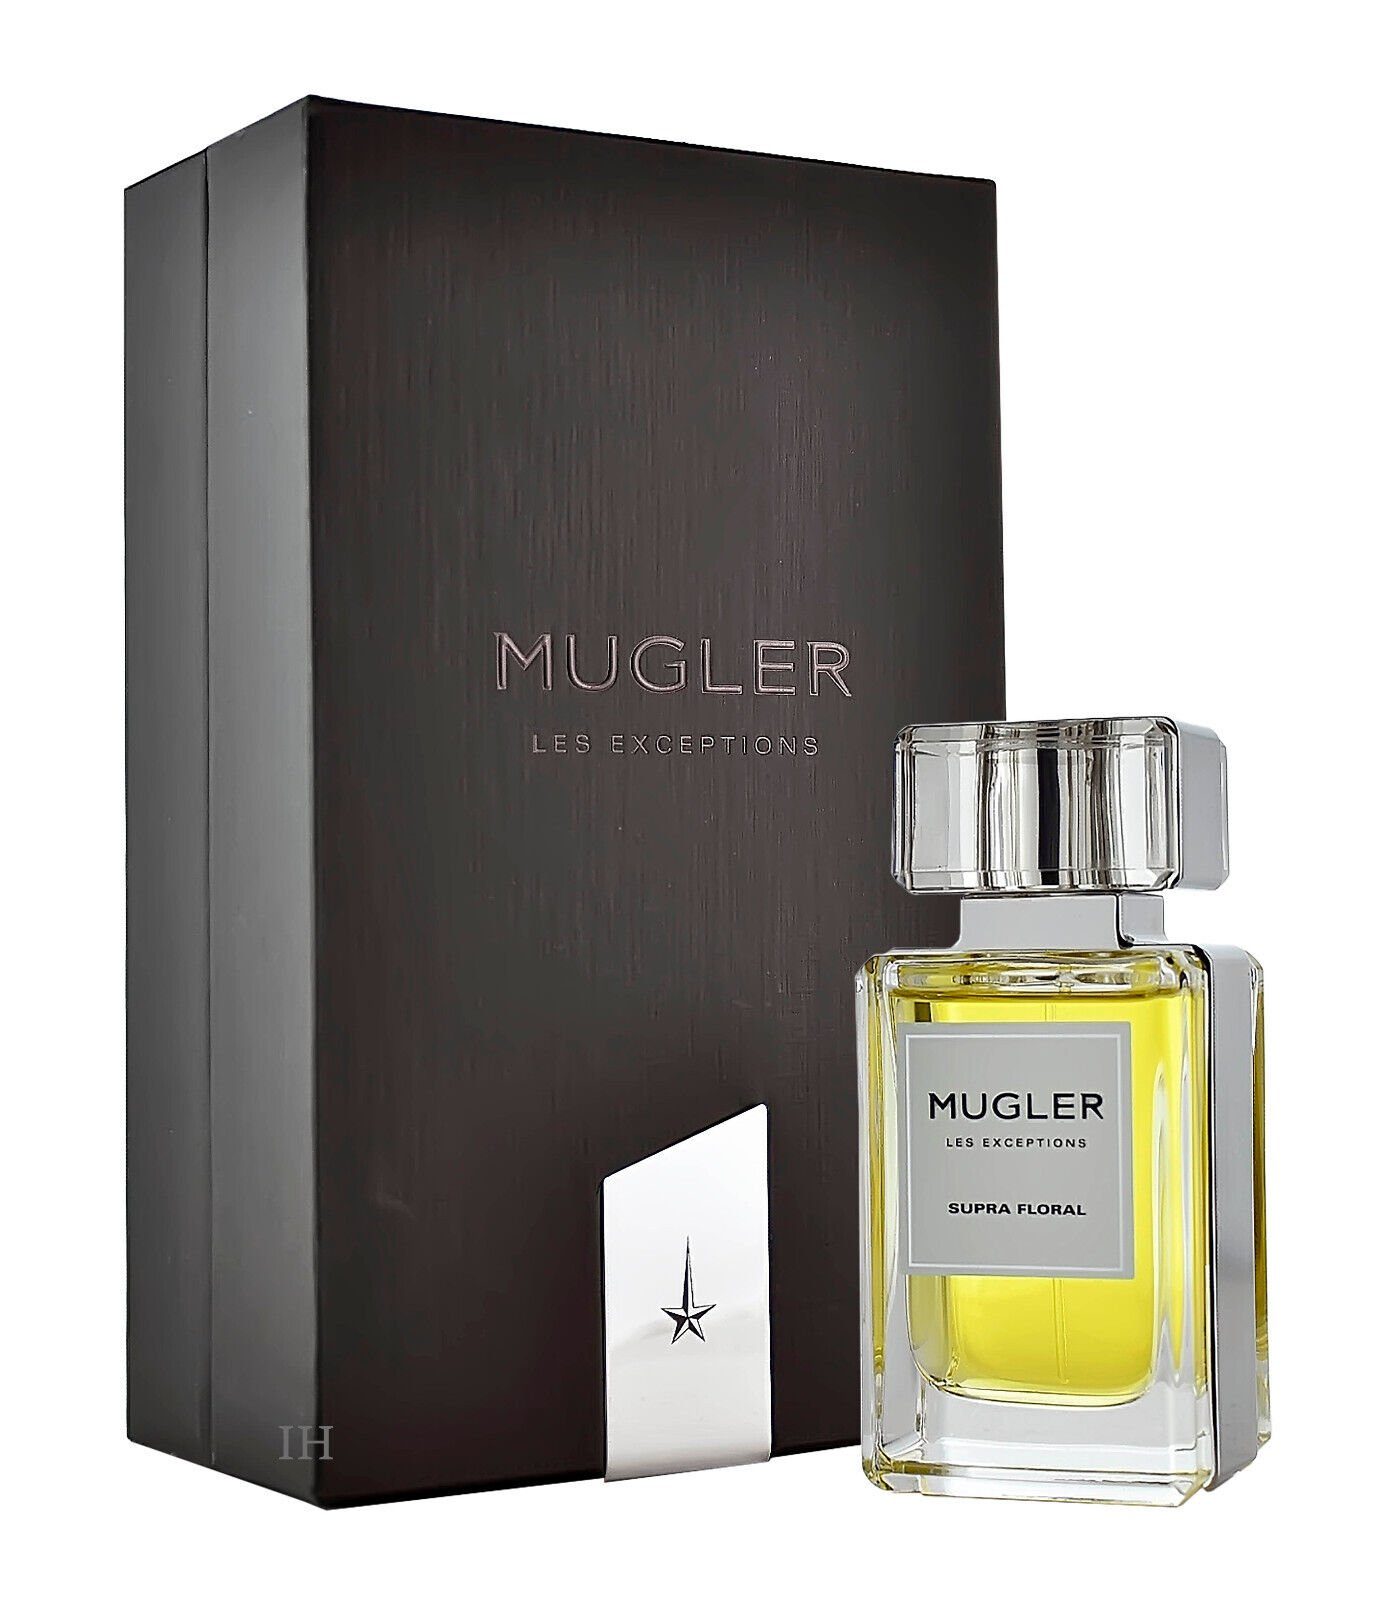 Eau EDP Mugler Parfum Supra Floral 80ml de Mugler Exceptions Les